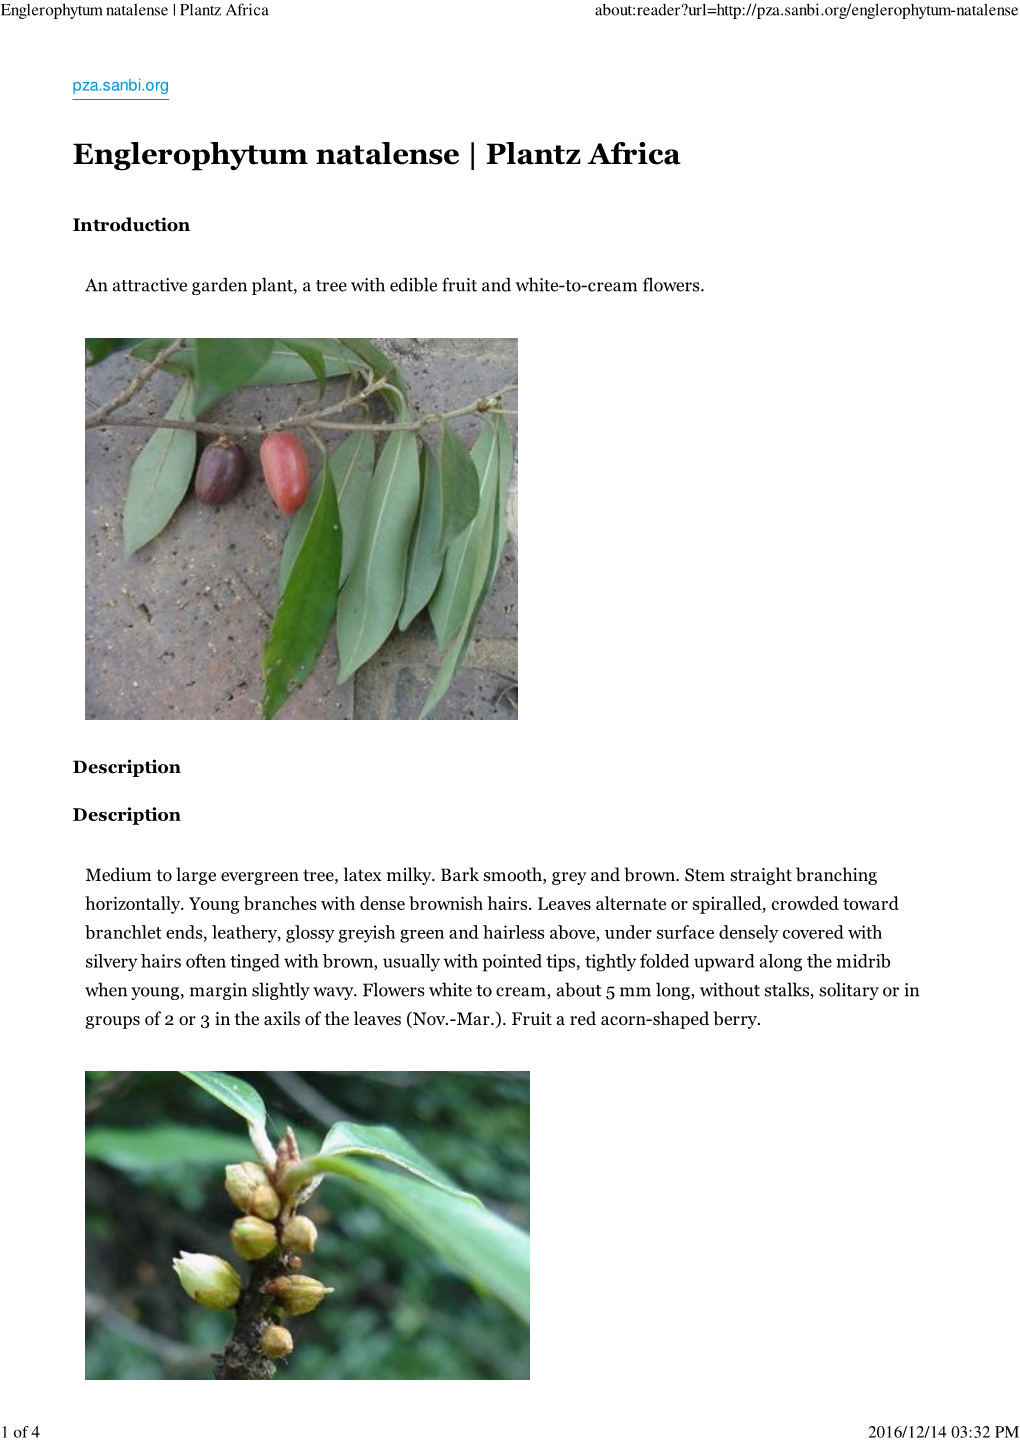 Englerophytum Natalense | Plantz Africa About:Reader?Url=